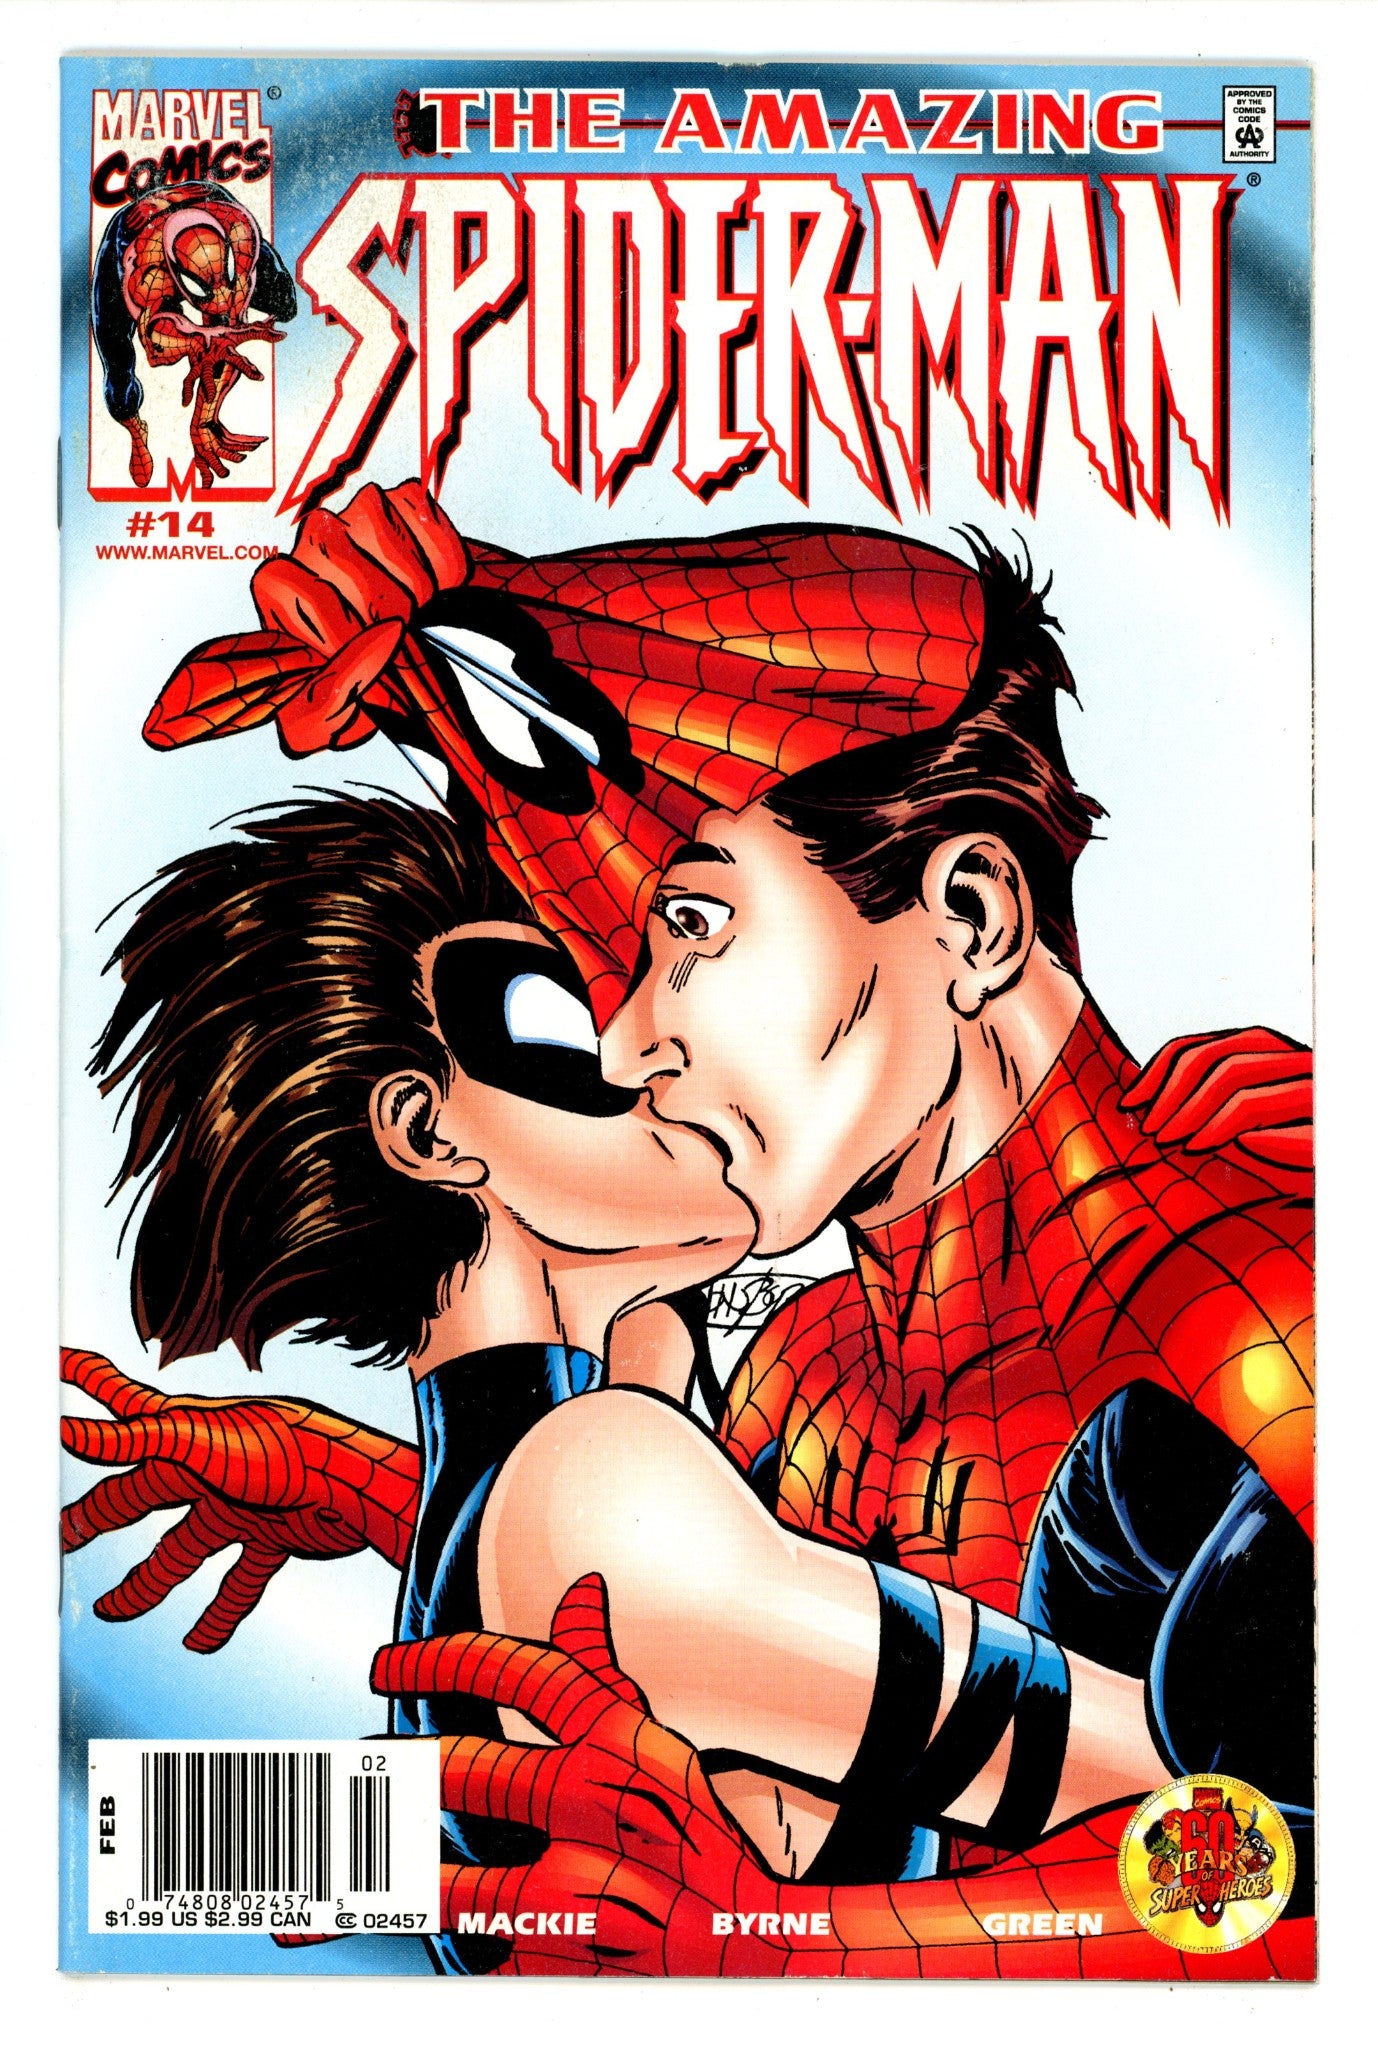 The Amazing Spider-Man Vol 2 14 FN (6.0) (2000) Newsstand 